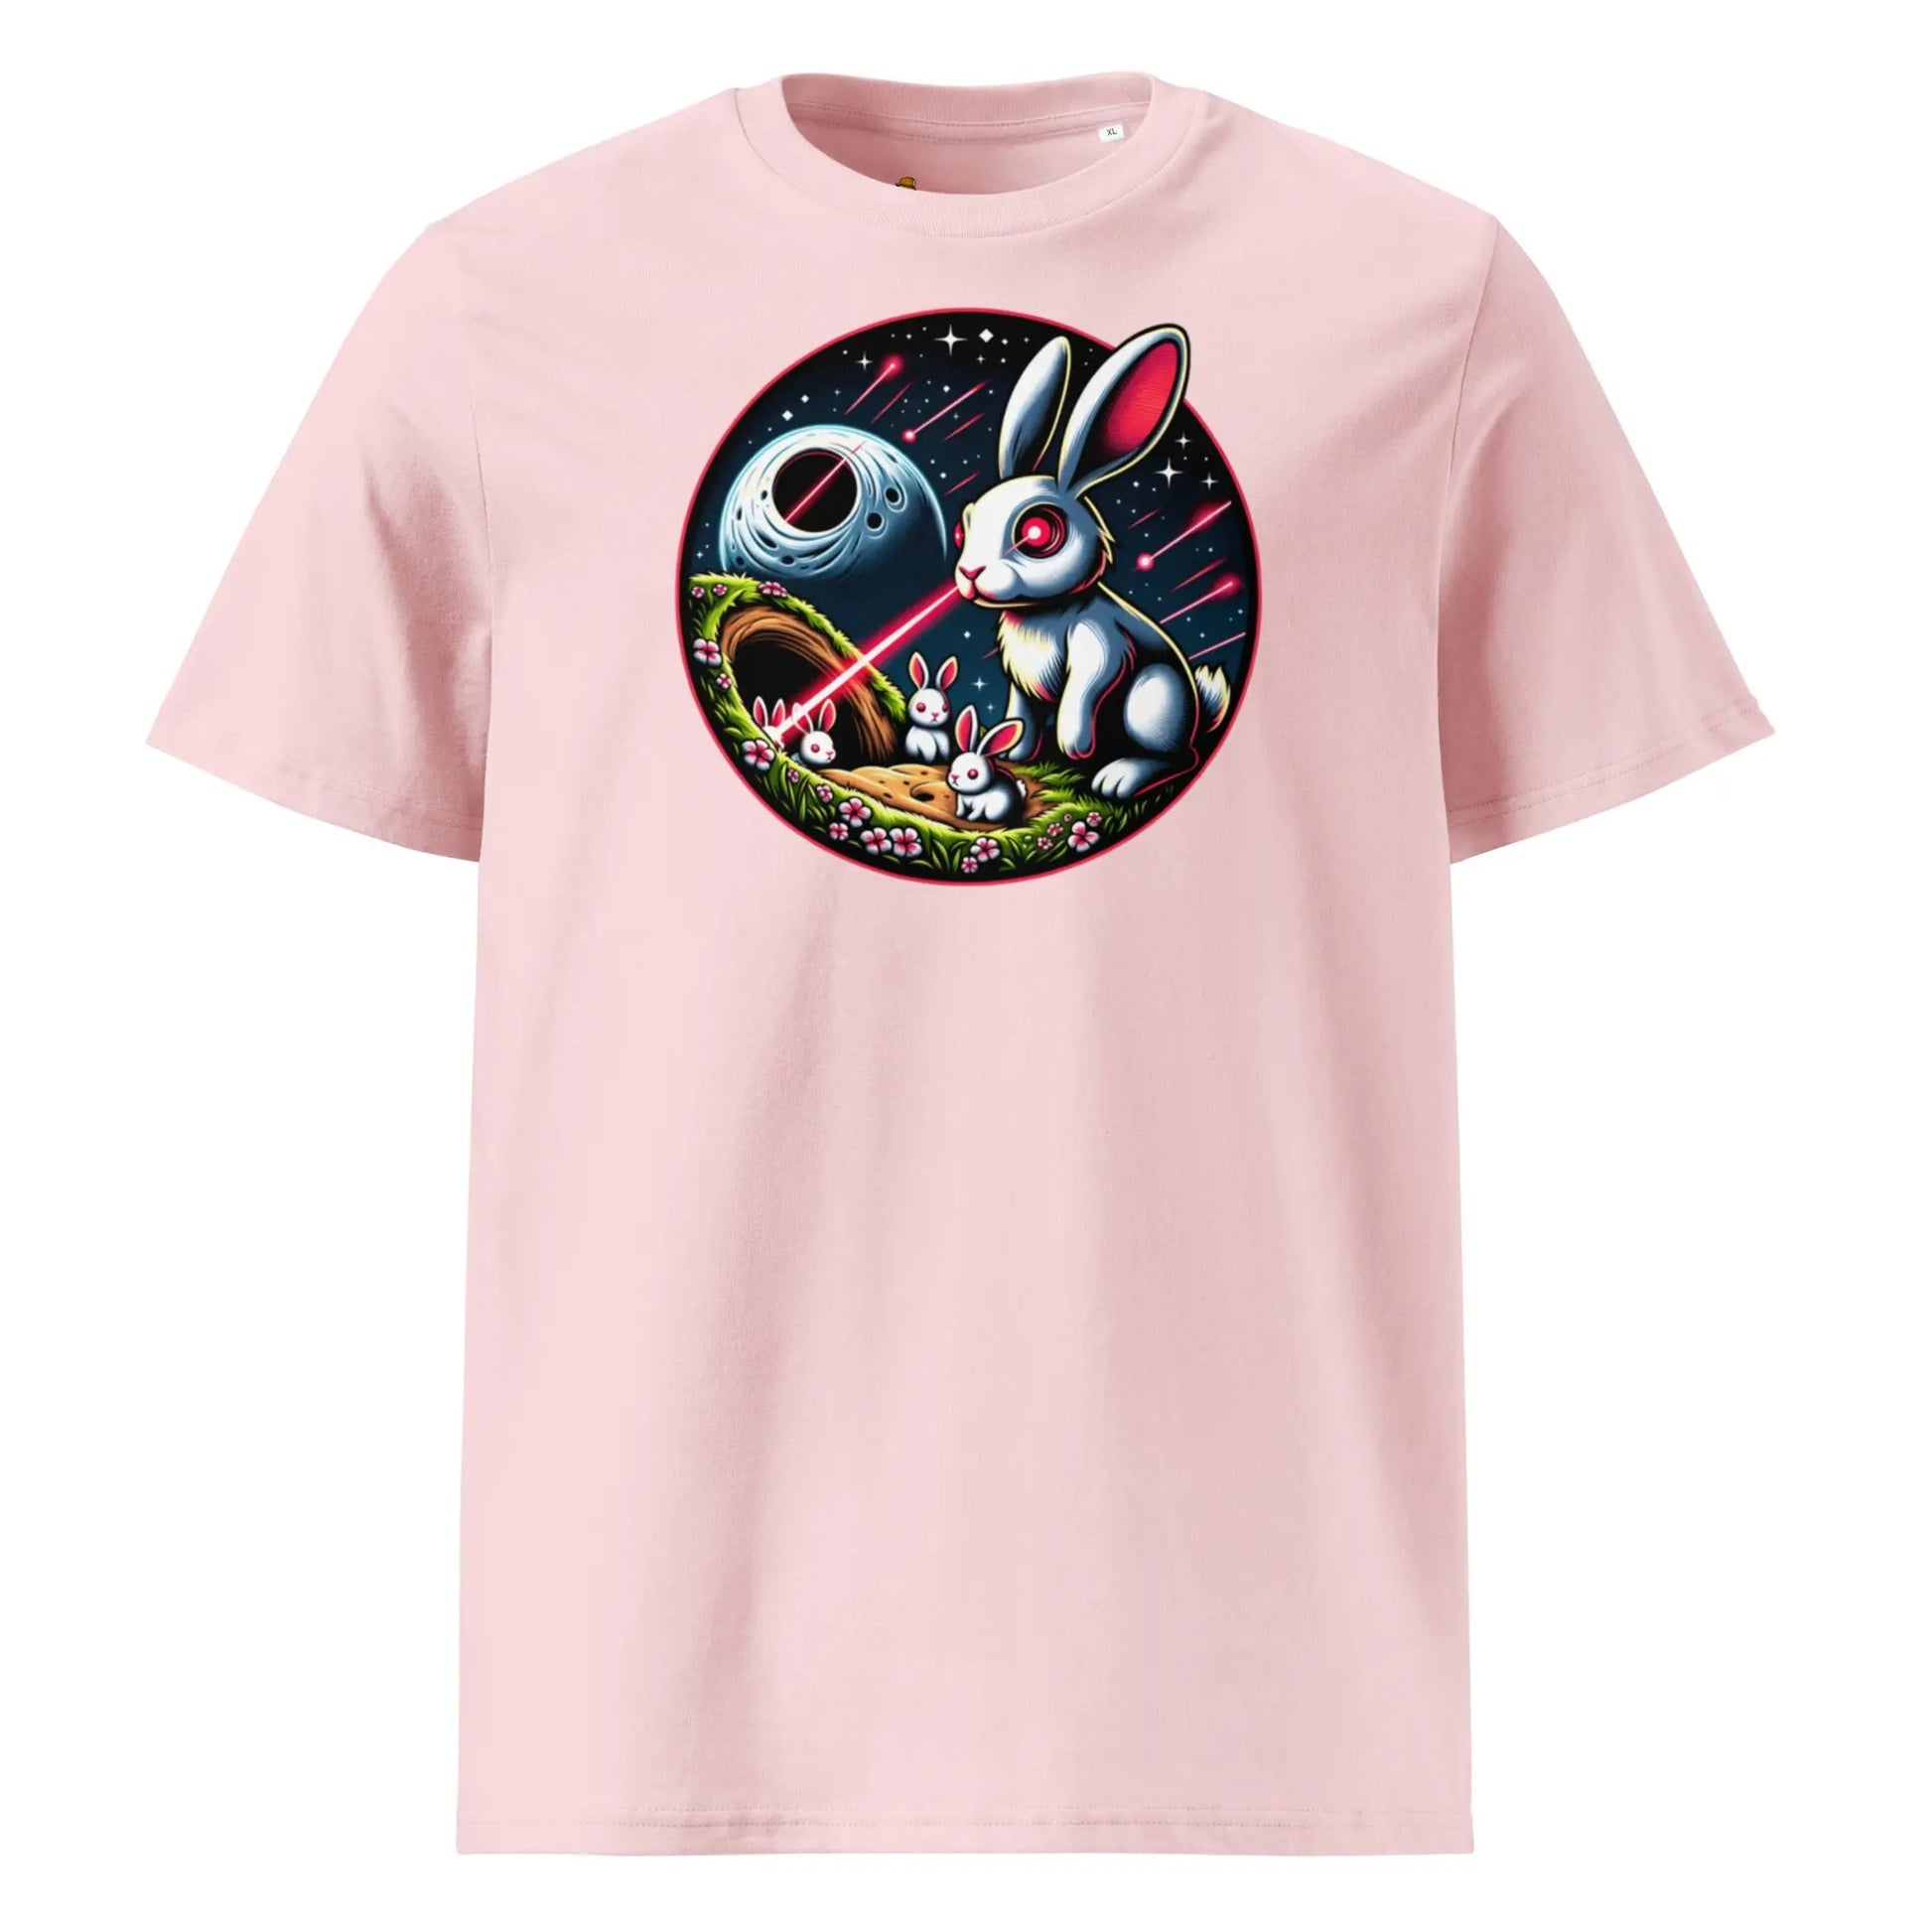 Laser Eyes Rabbit Family - Bitcoin Rabbit Hole - Premium Unisex Organic Cotton Bitcoin T-shirt Pink Color